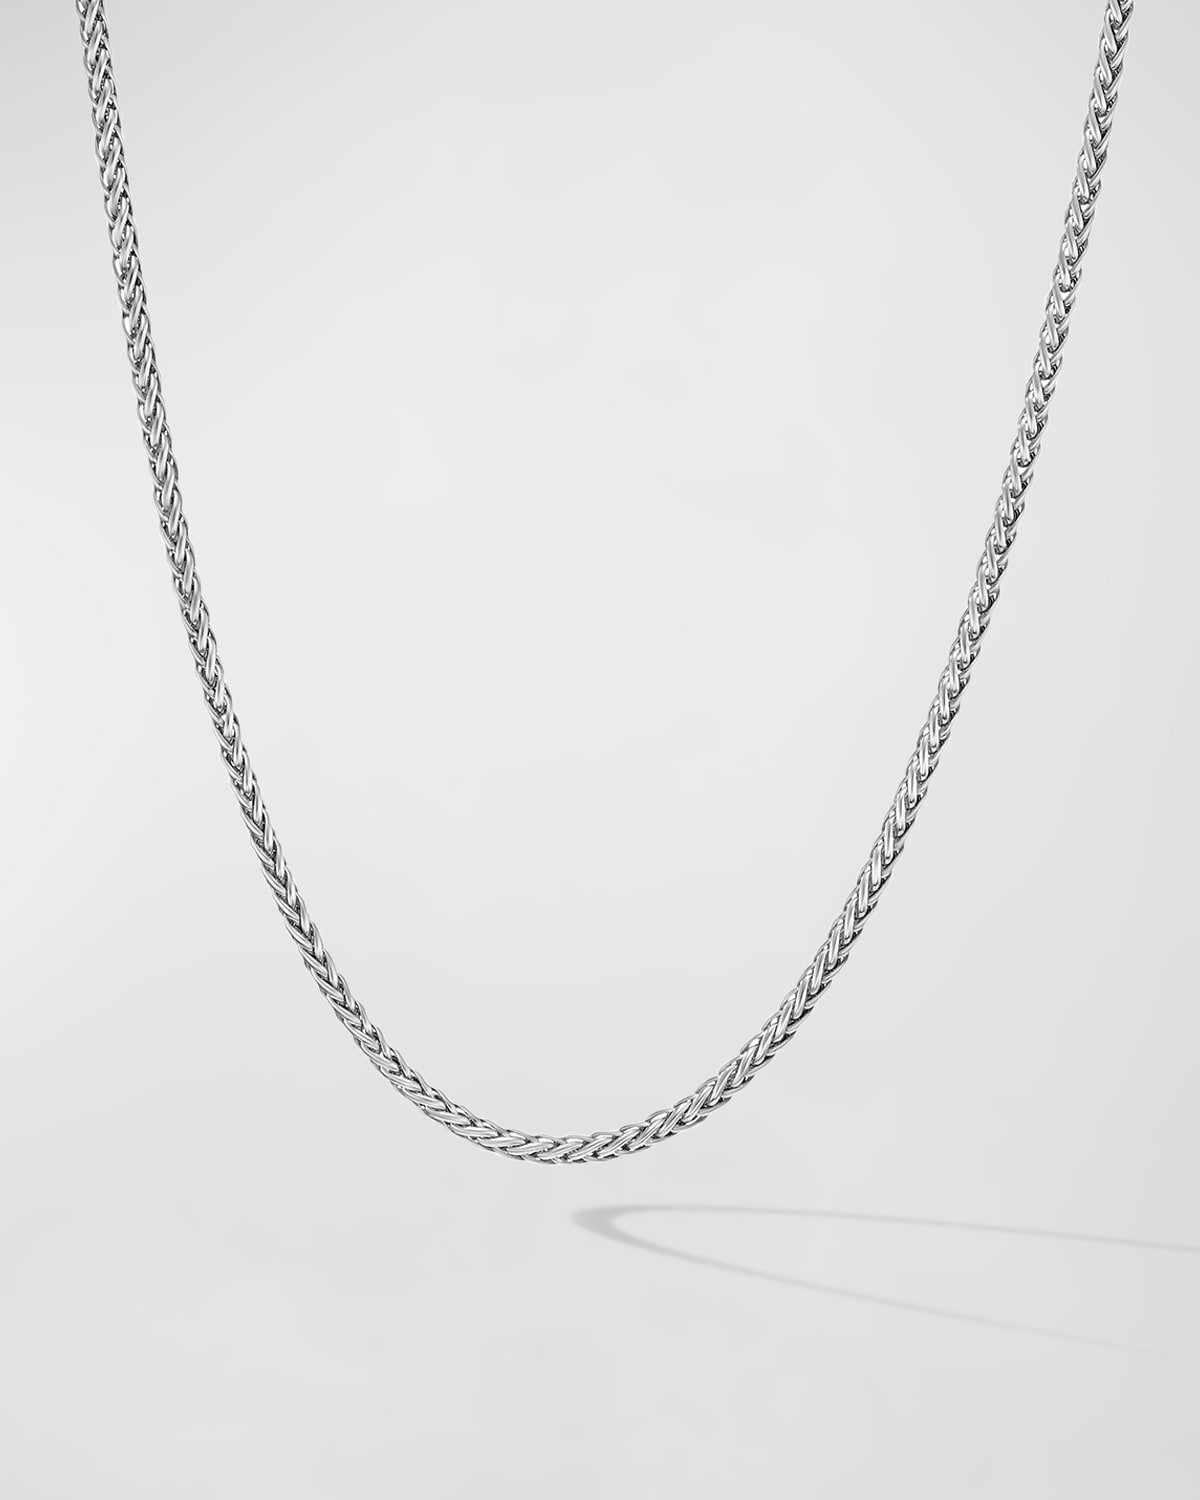 David Yurman Men's Wheat Chain Necklace in Silver, 2.5mm, 22"L